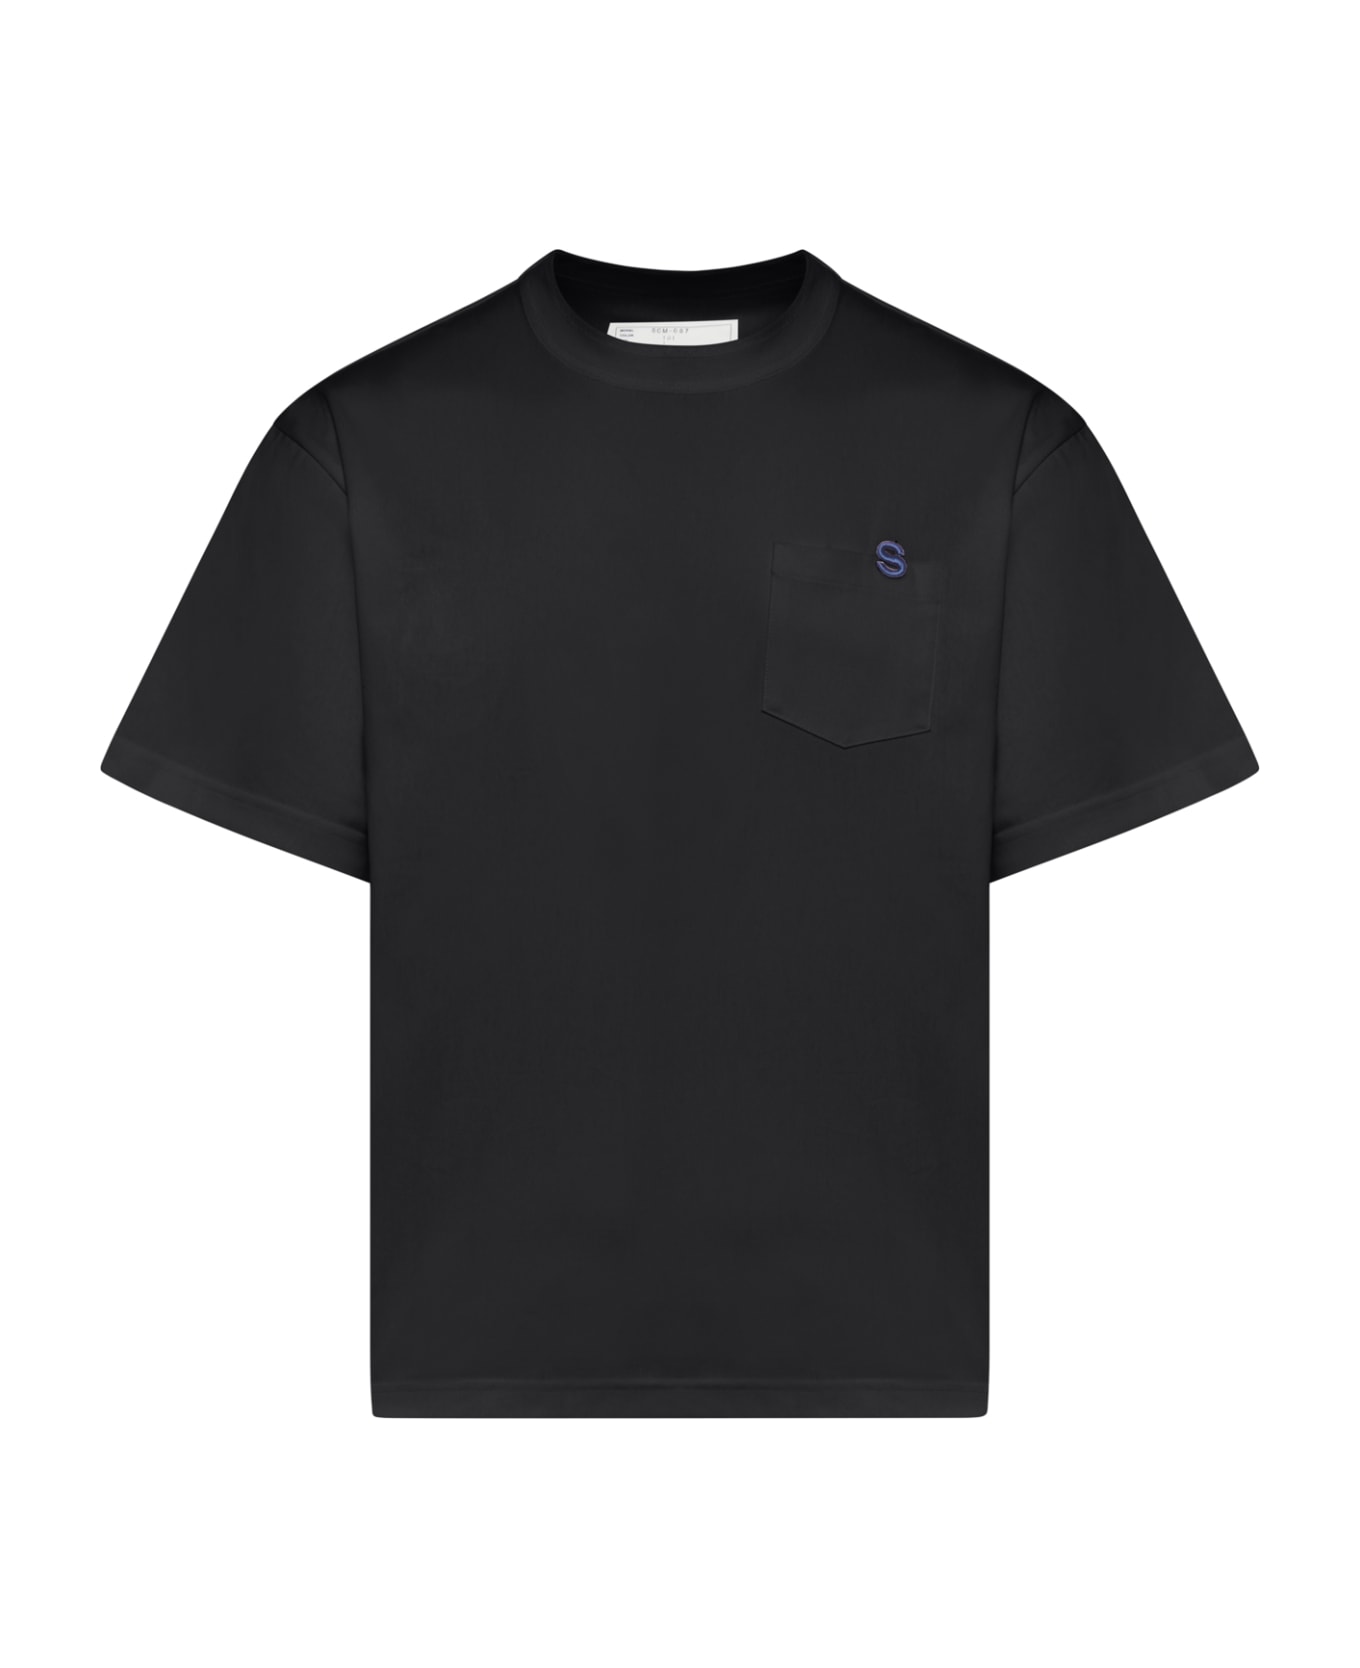 Sacai S Cotton Jersey T-shirt - Black シャツ